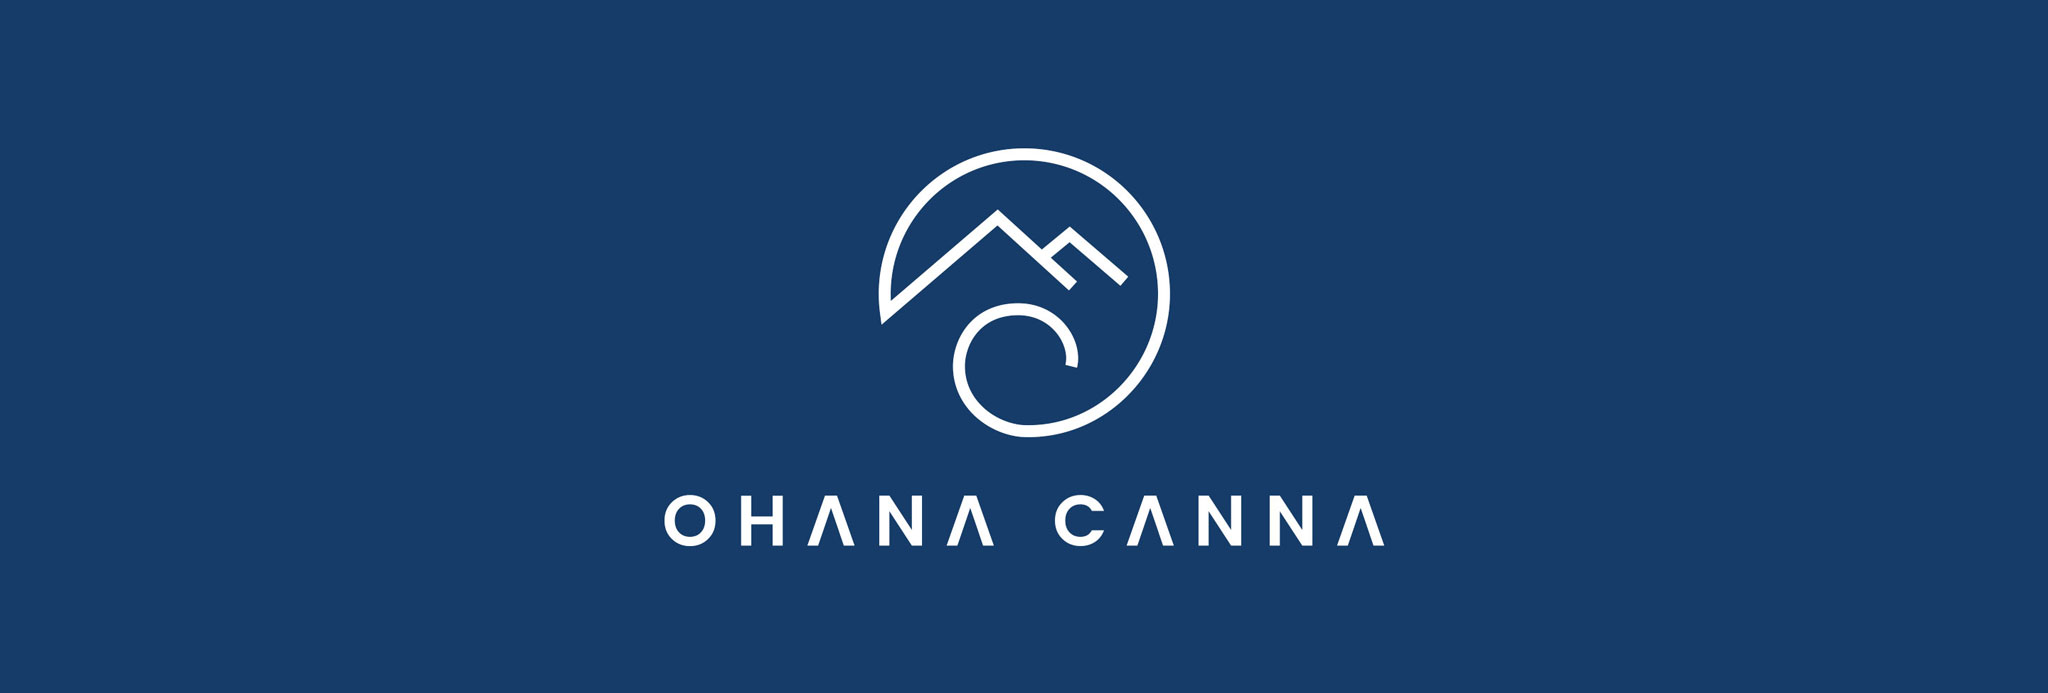 Ohana Canna logo design